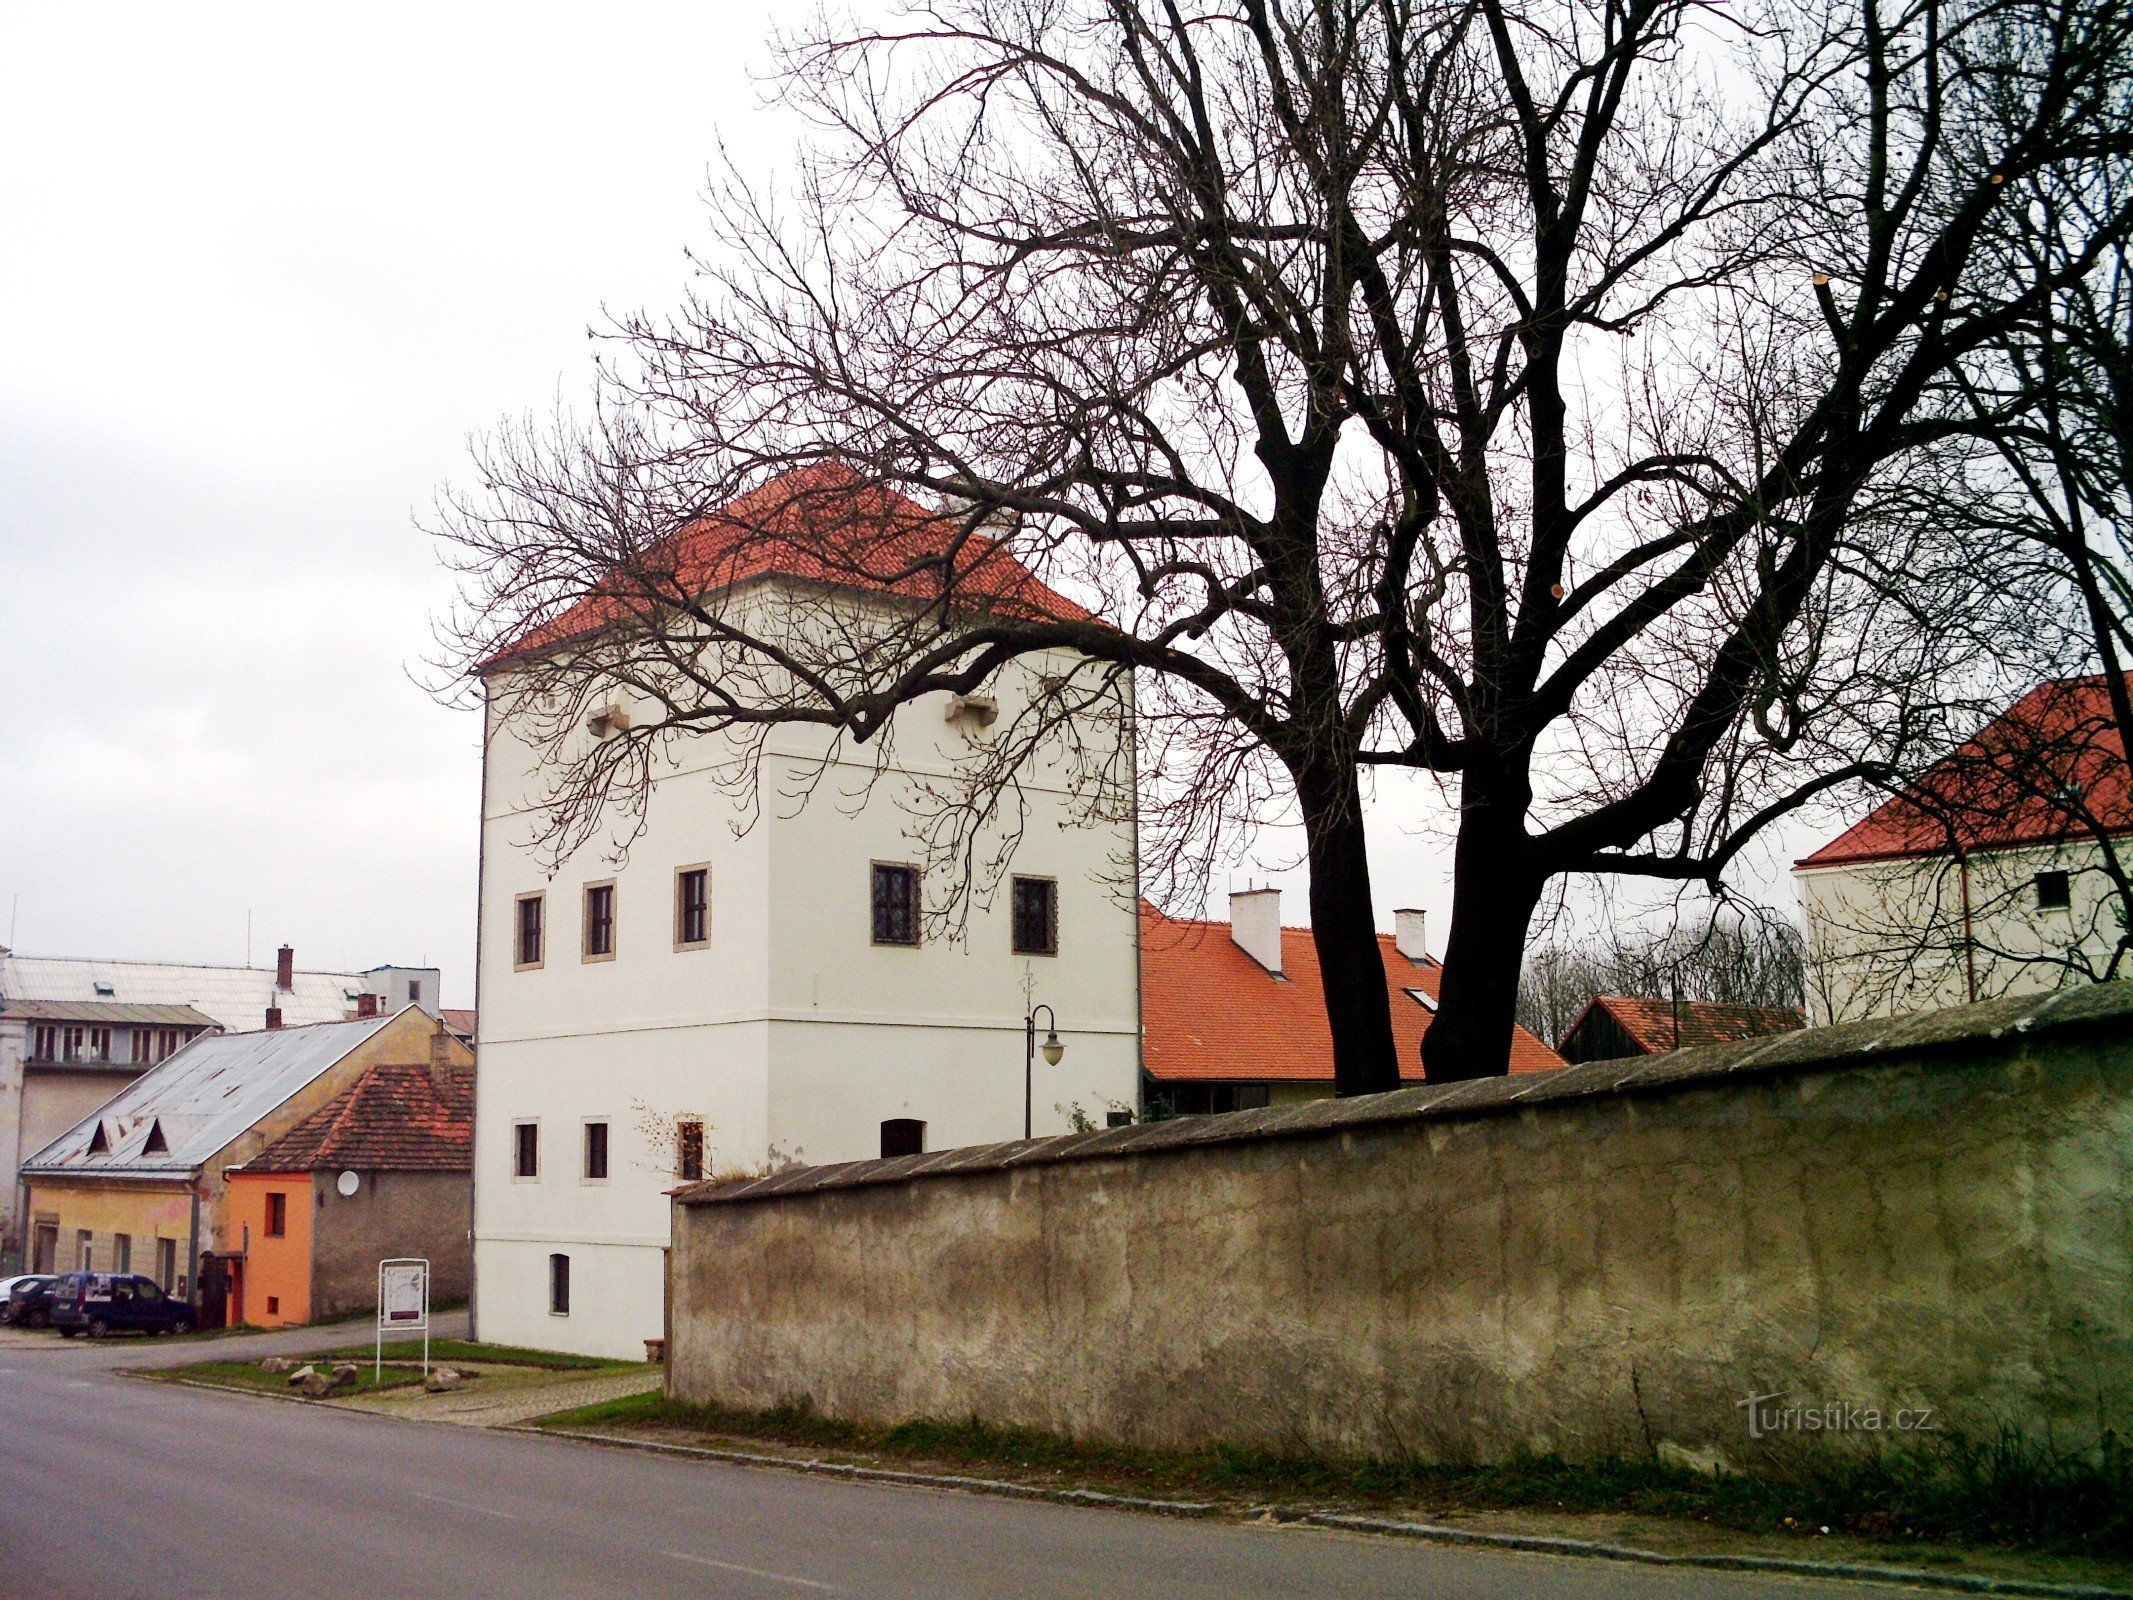 Pháo đài của Goltz, tối 5. května 8, Golčův Jeníkov